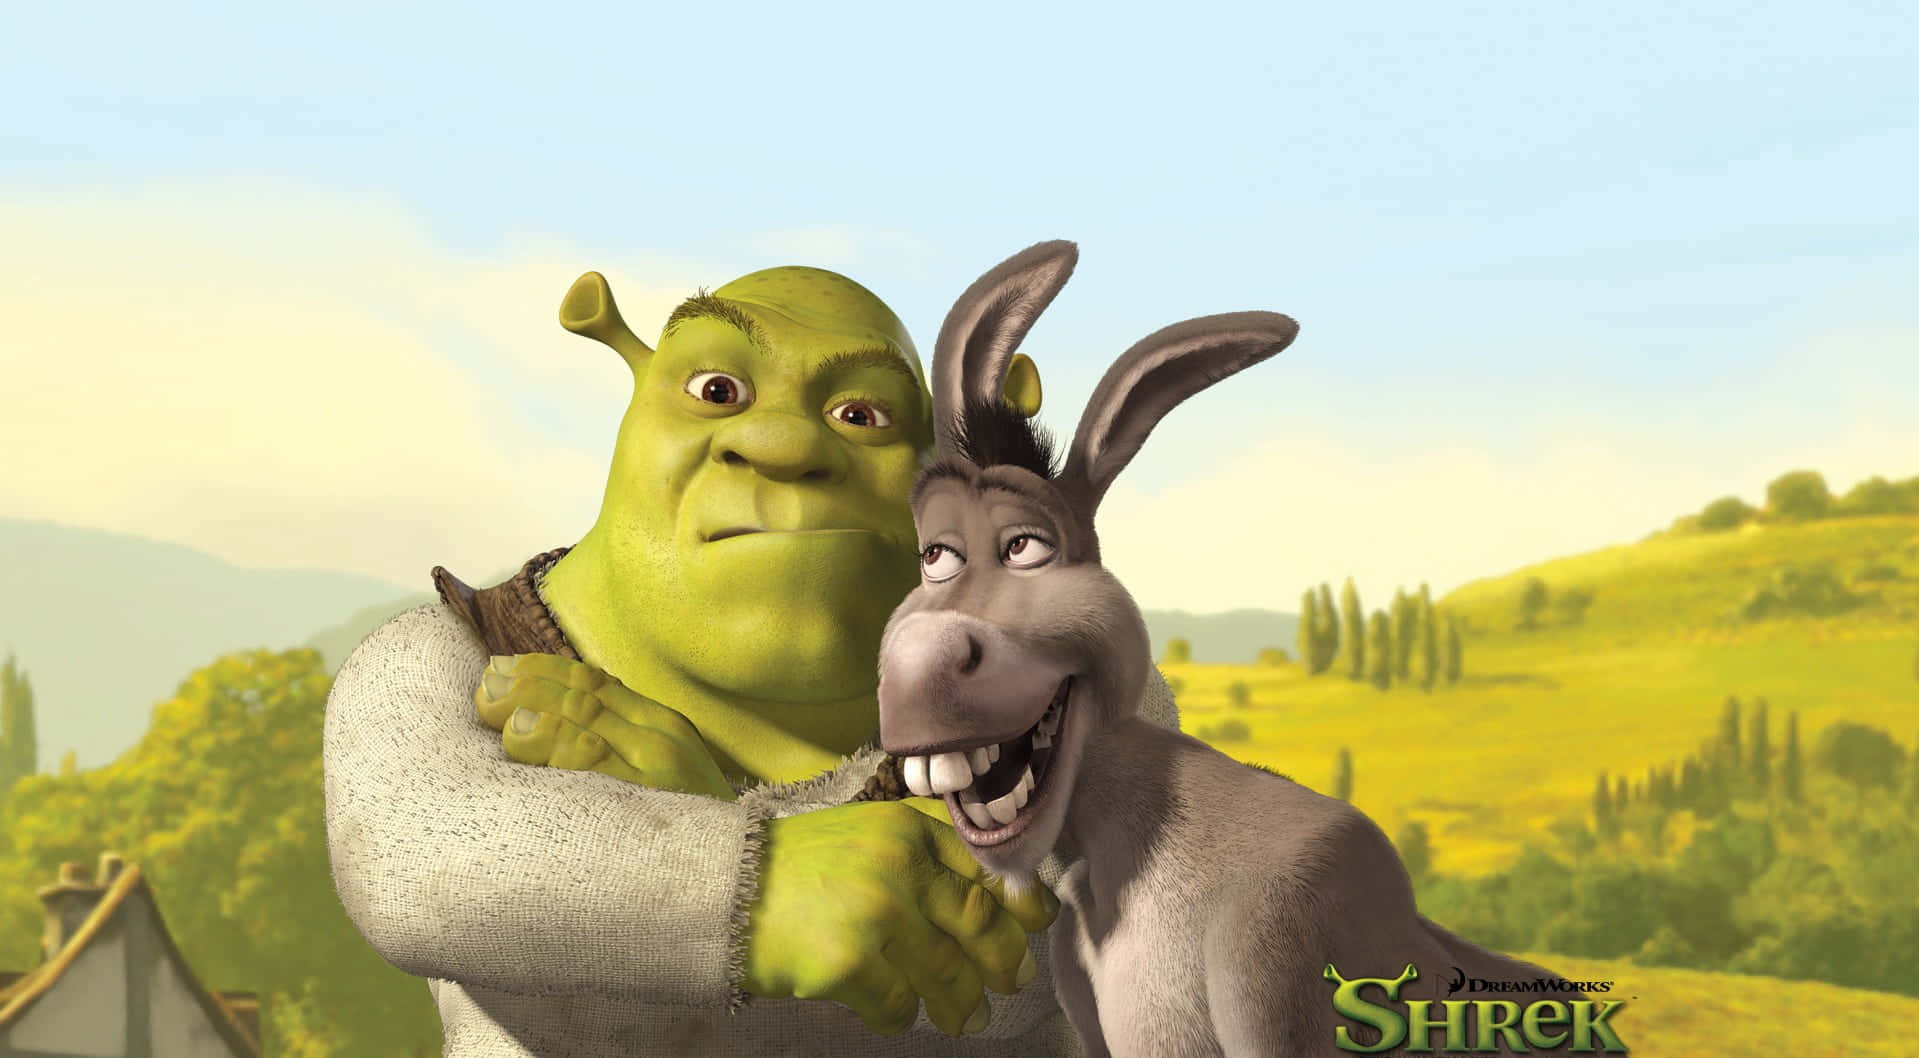 Shrekand Donkey Friends Forever Wallpaper